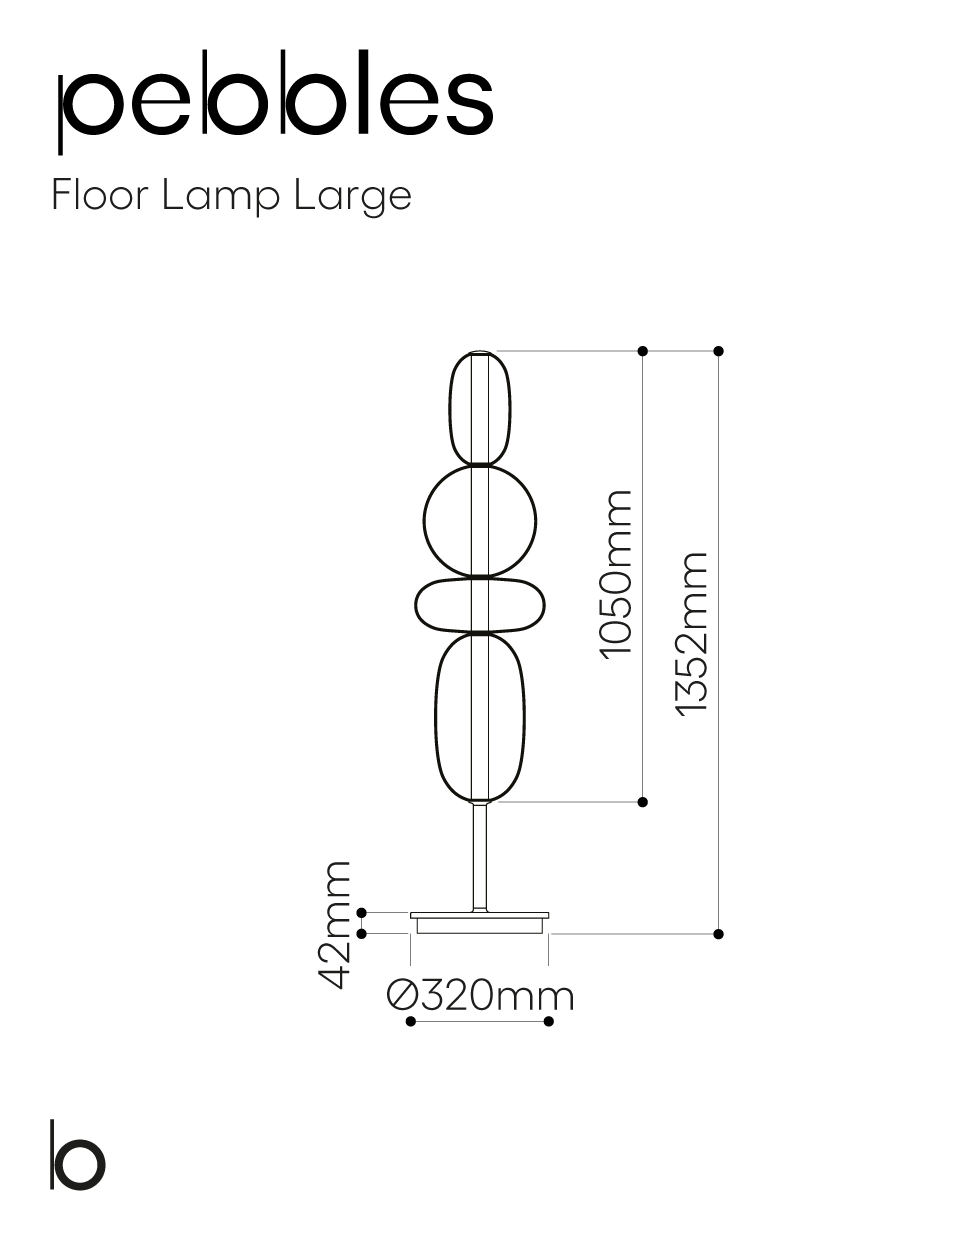 Bomma-Pebbles-Floor-lamp-large-configuration-2.png